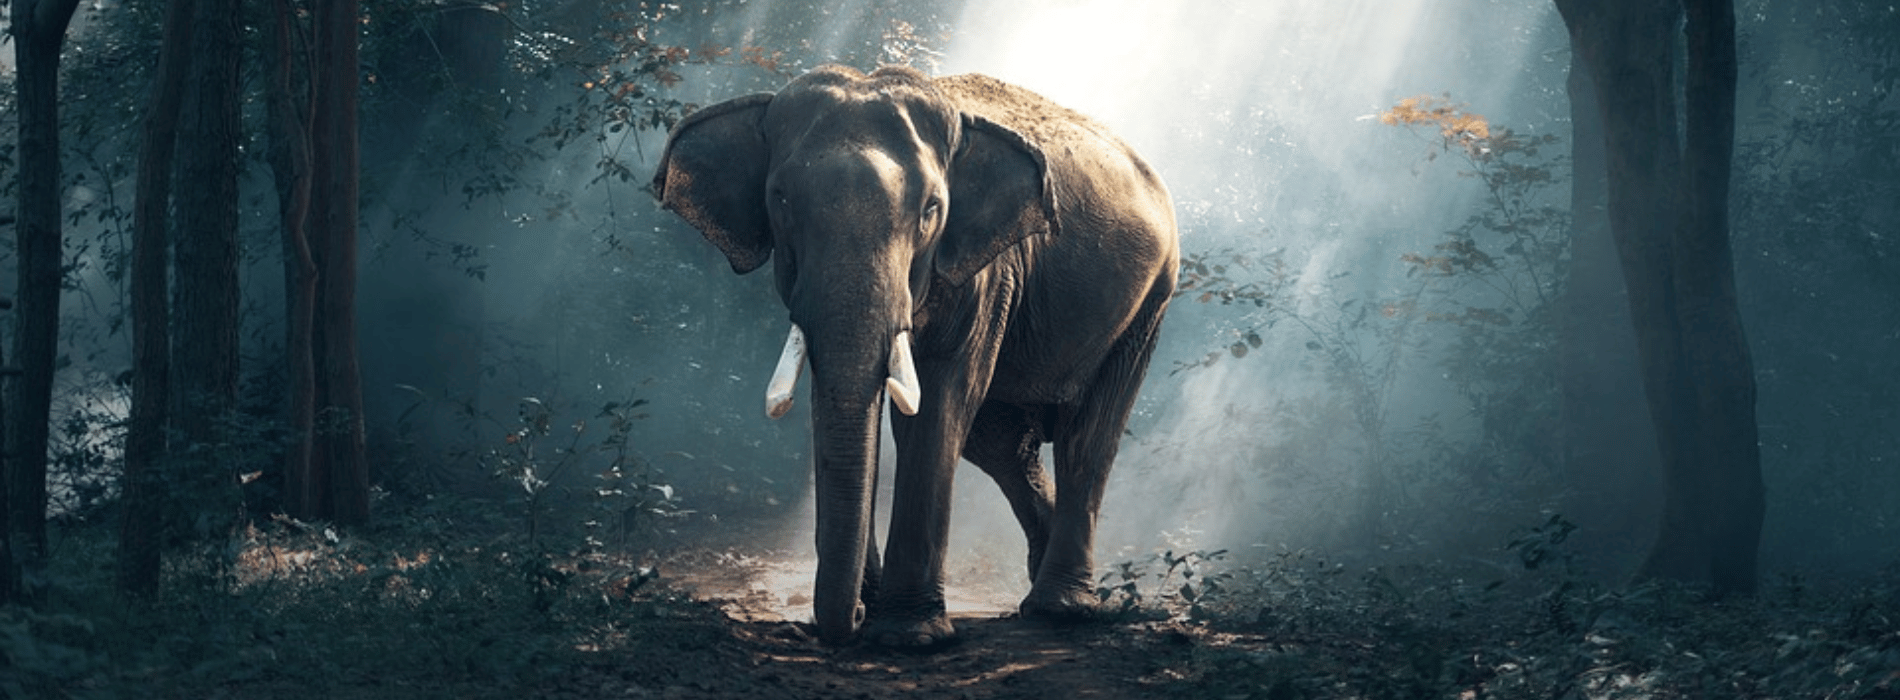 Elefantensymbolik und Bedeutung